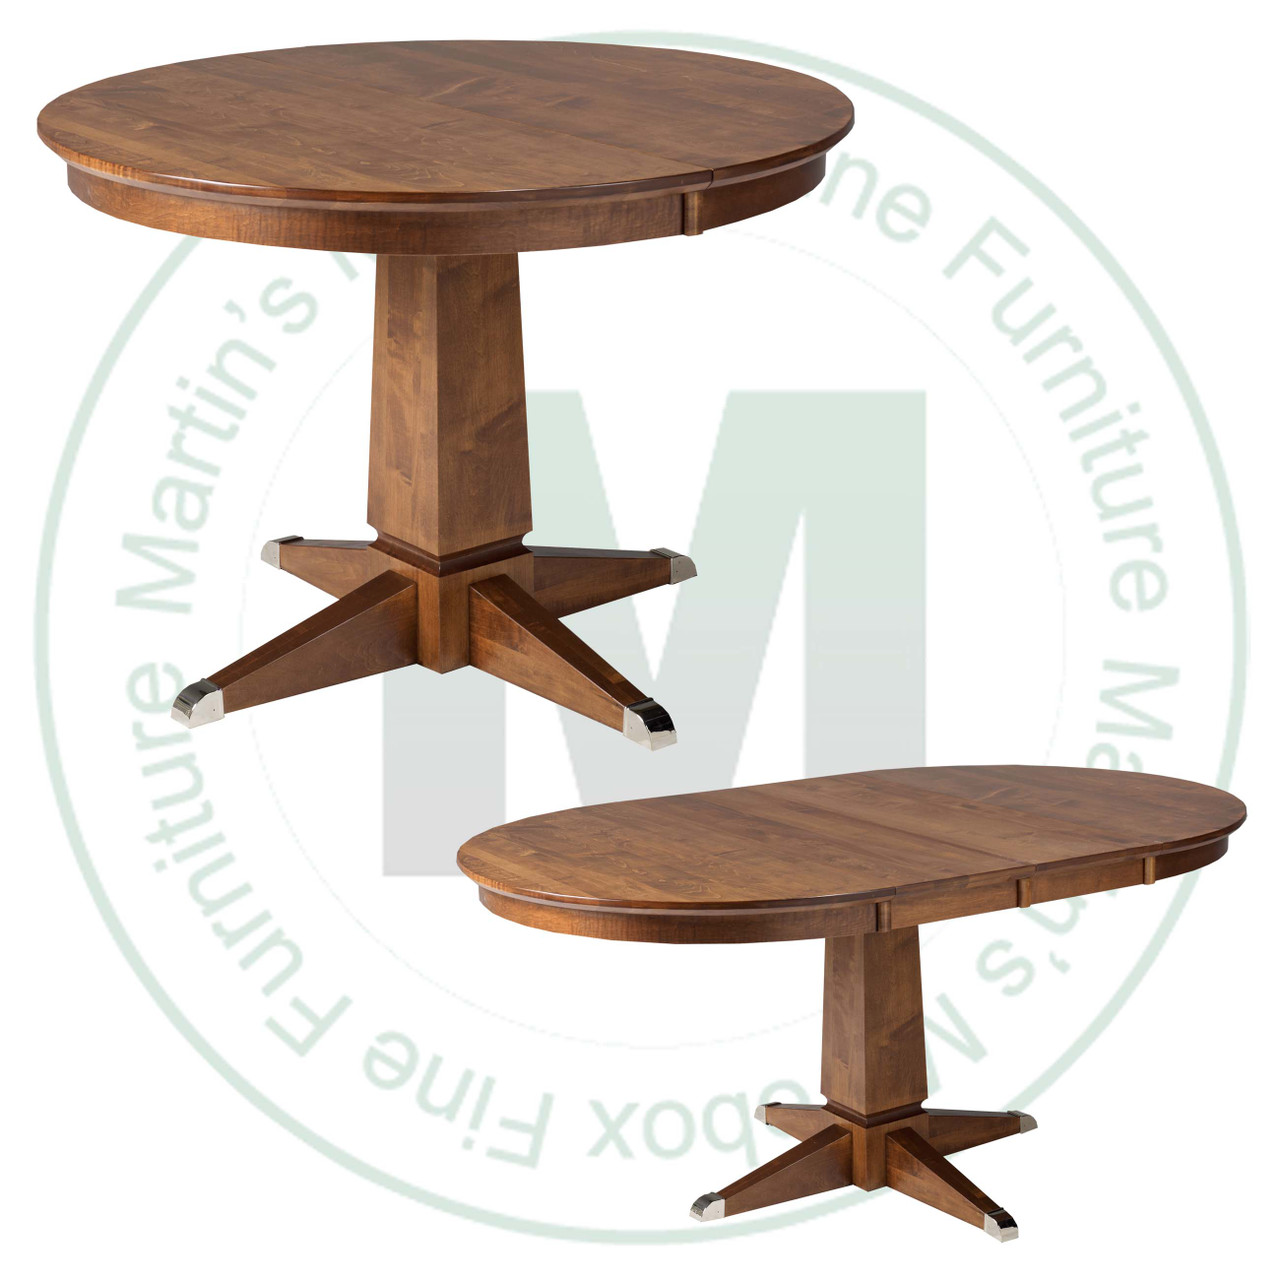 Oak Danish Single Pedestal Table 36''D x 48''W x 30''H With 2 - 12'' Leaves